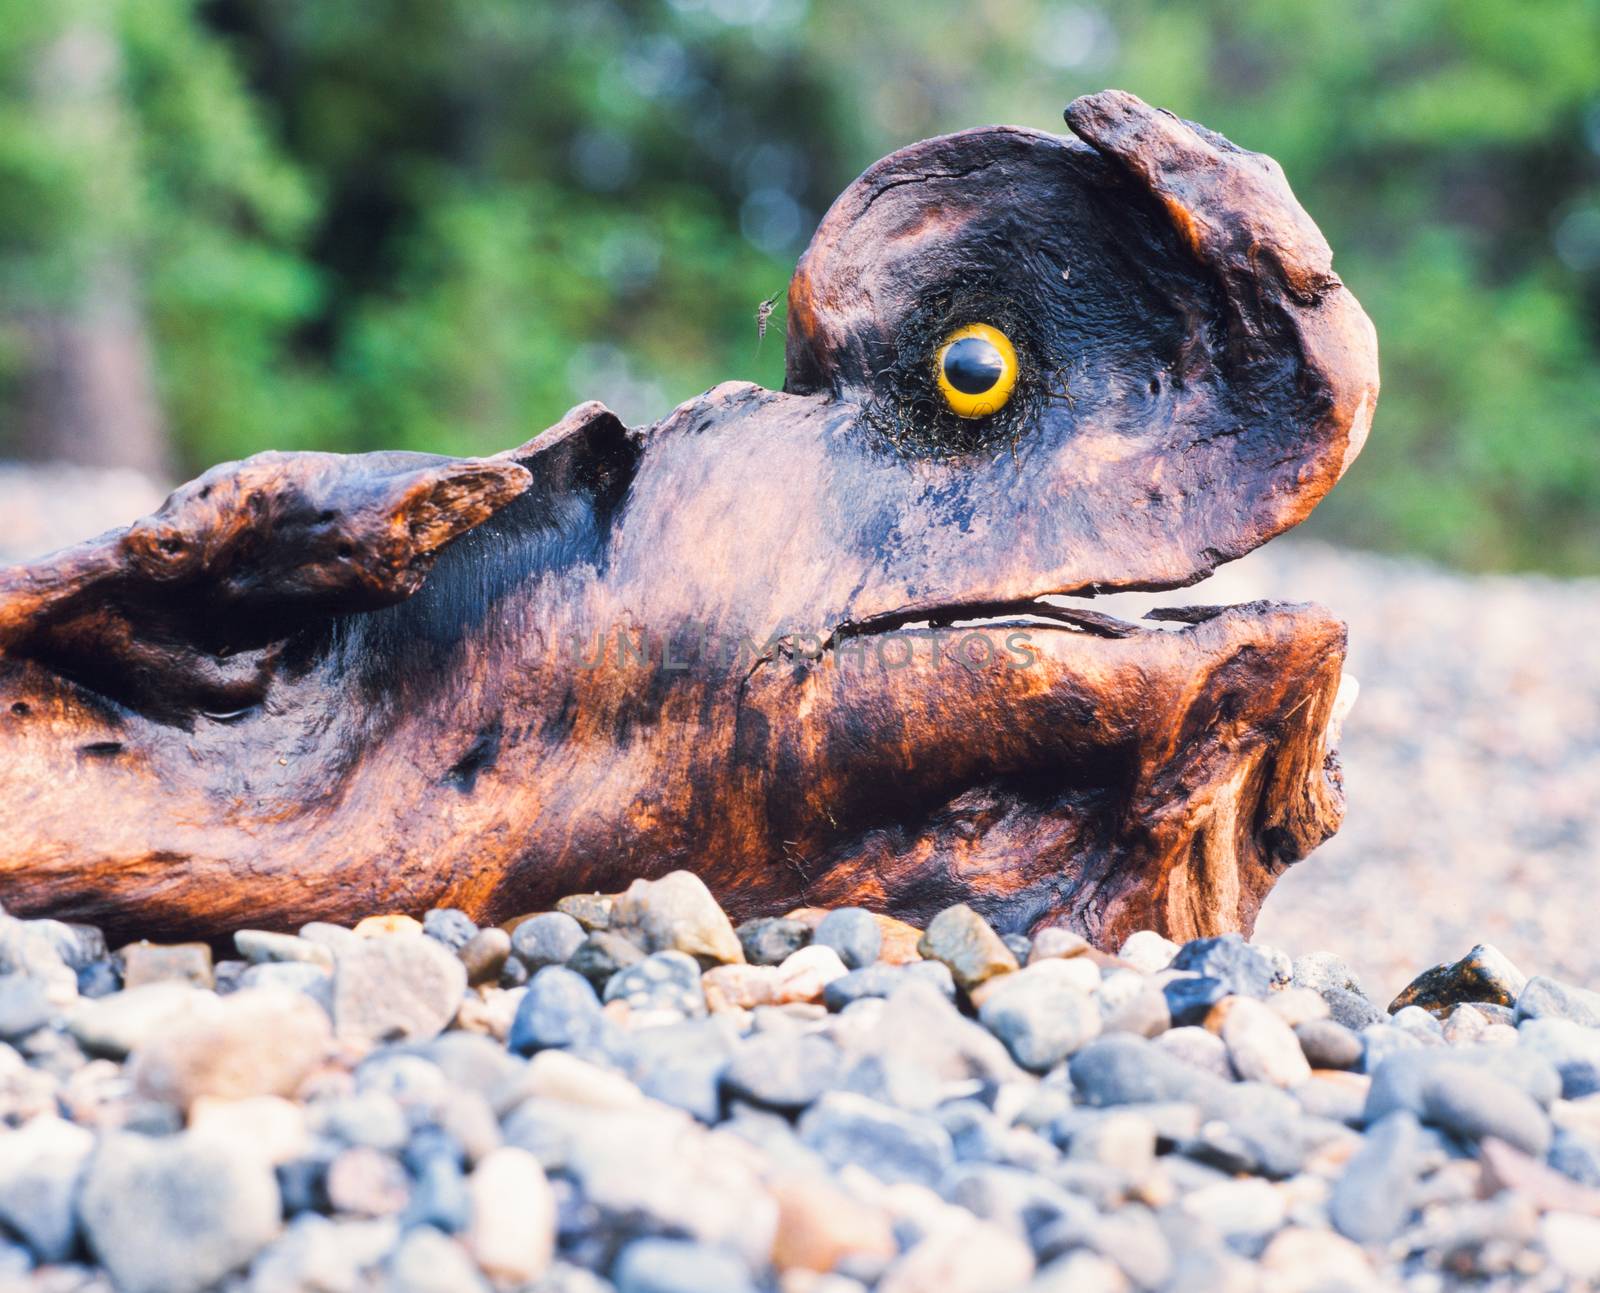 Fun fantasy driftwod chimera on shore gravel with sparkling orange eye